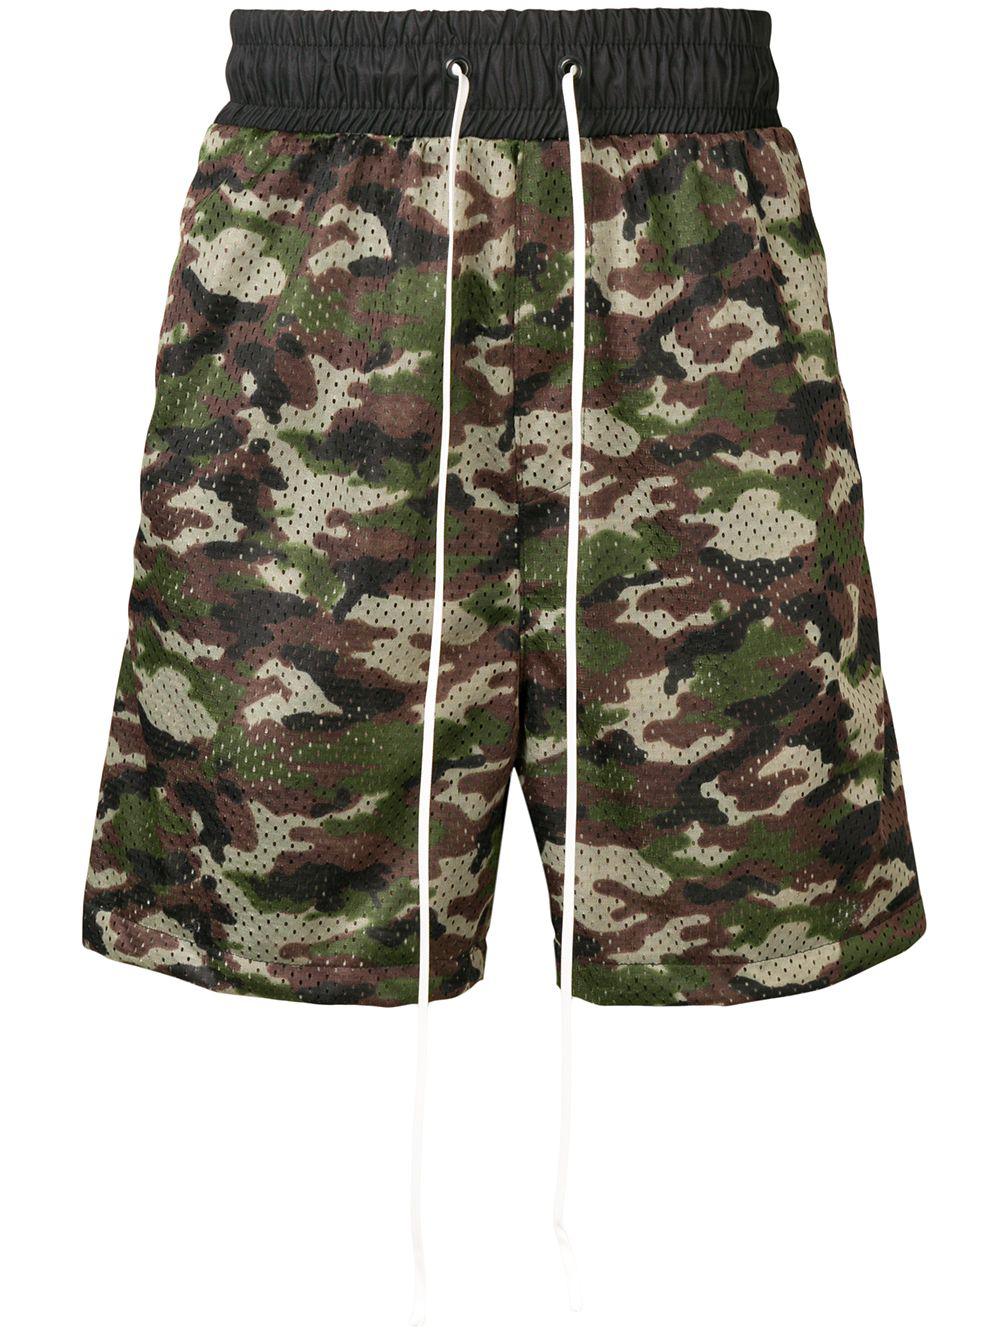 camouflage print shorts by DANIEL PATRICK